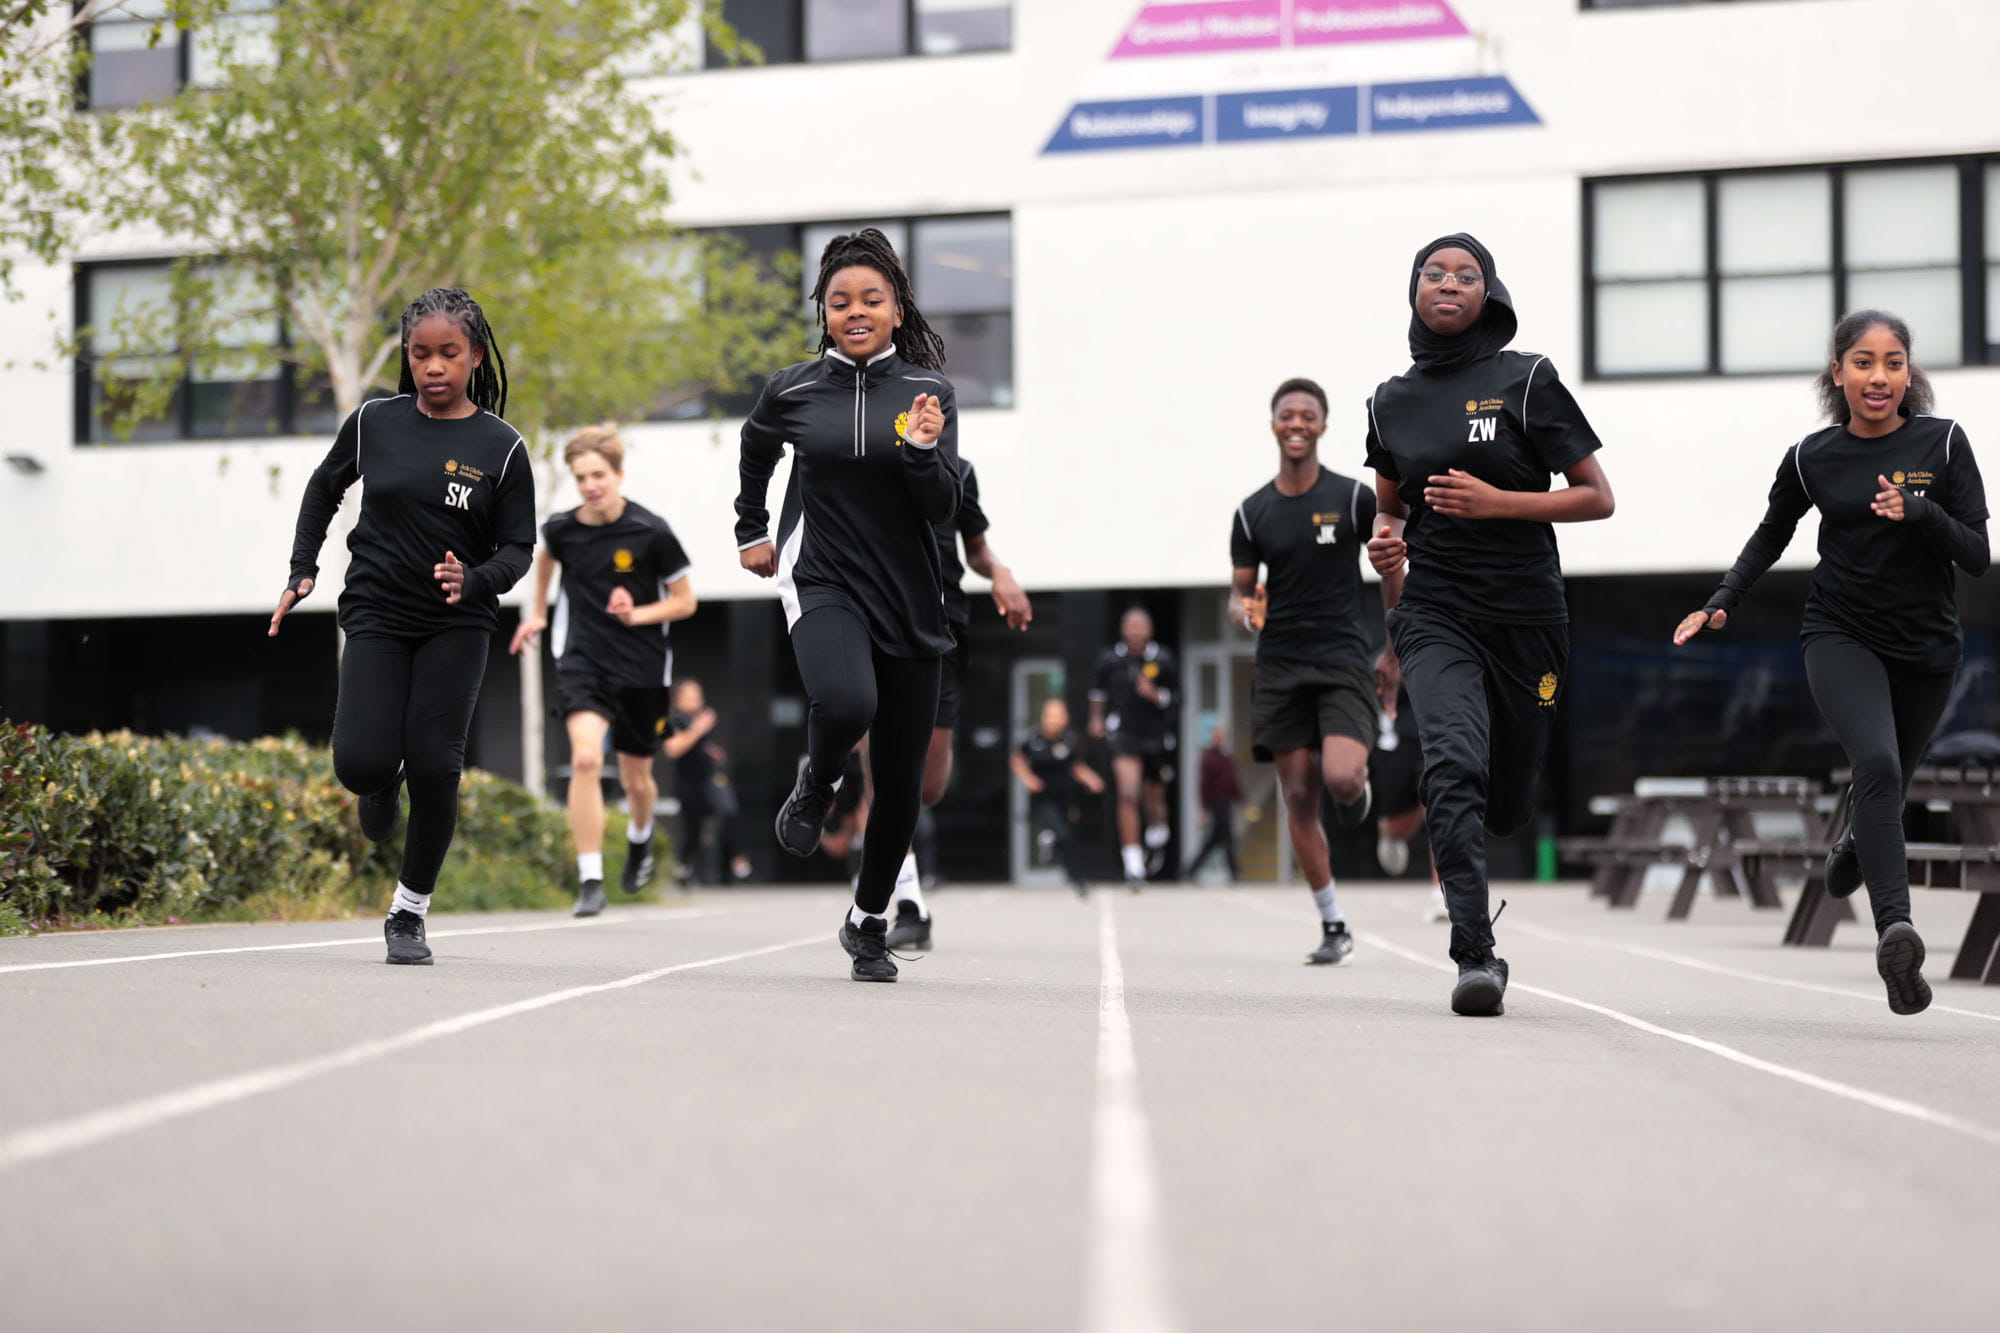 Mini London Marathon in Schools activity shot 